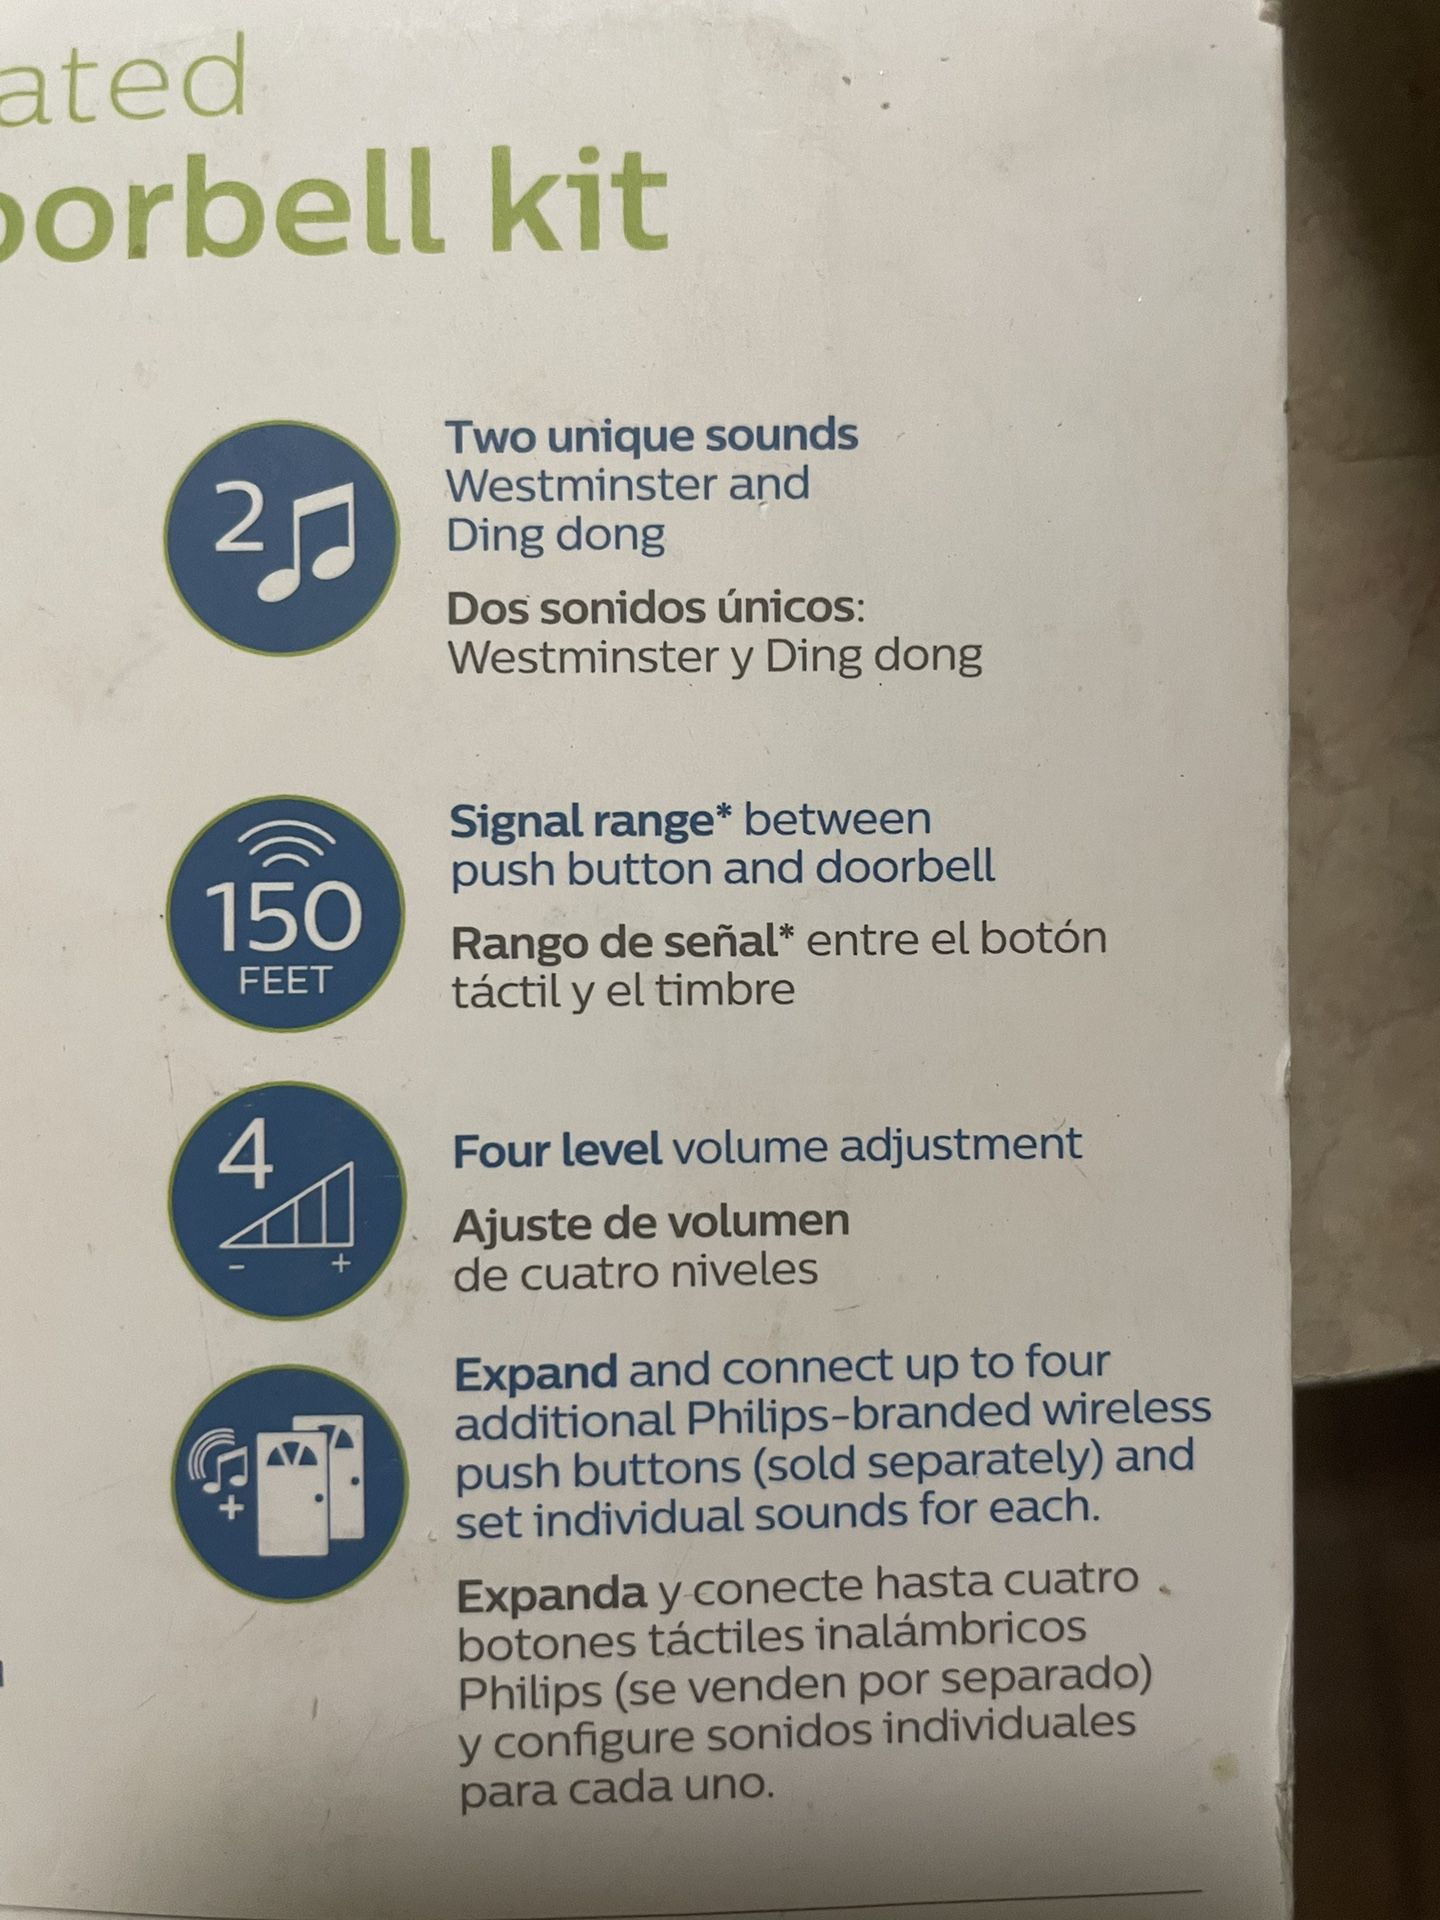 Philips Battery-Operated Wireless Doorbell Kit w/ 4 Level Volume Adjustment